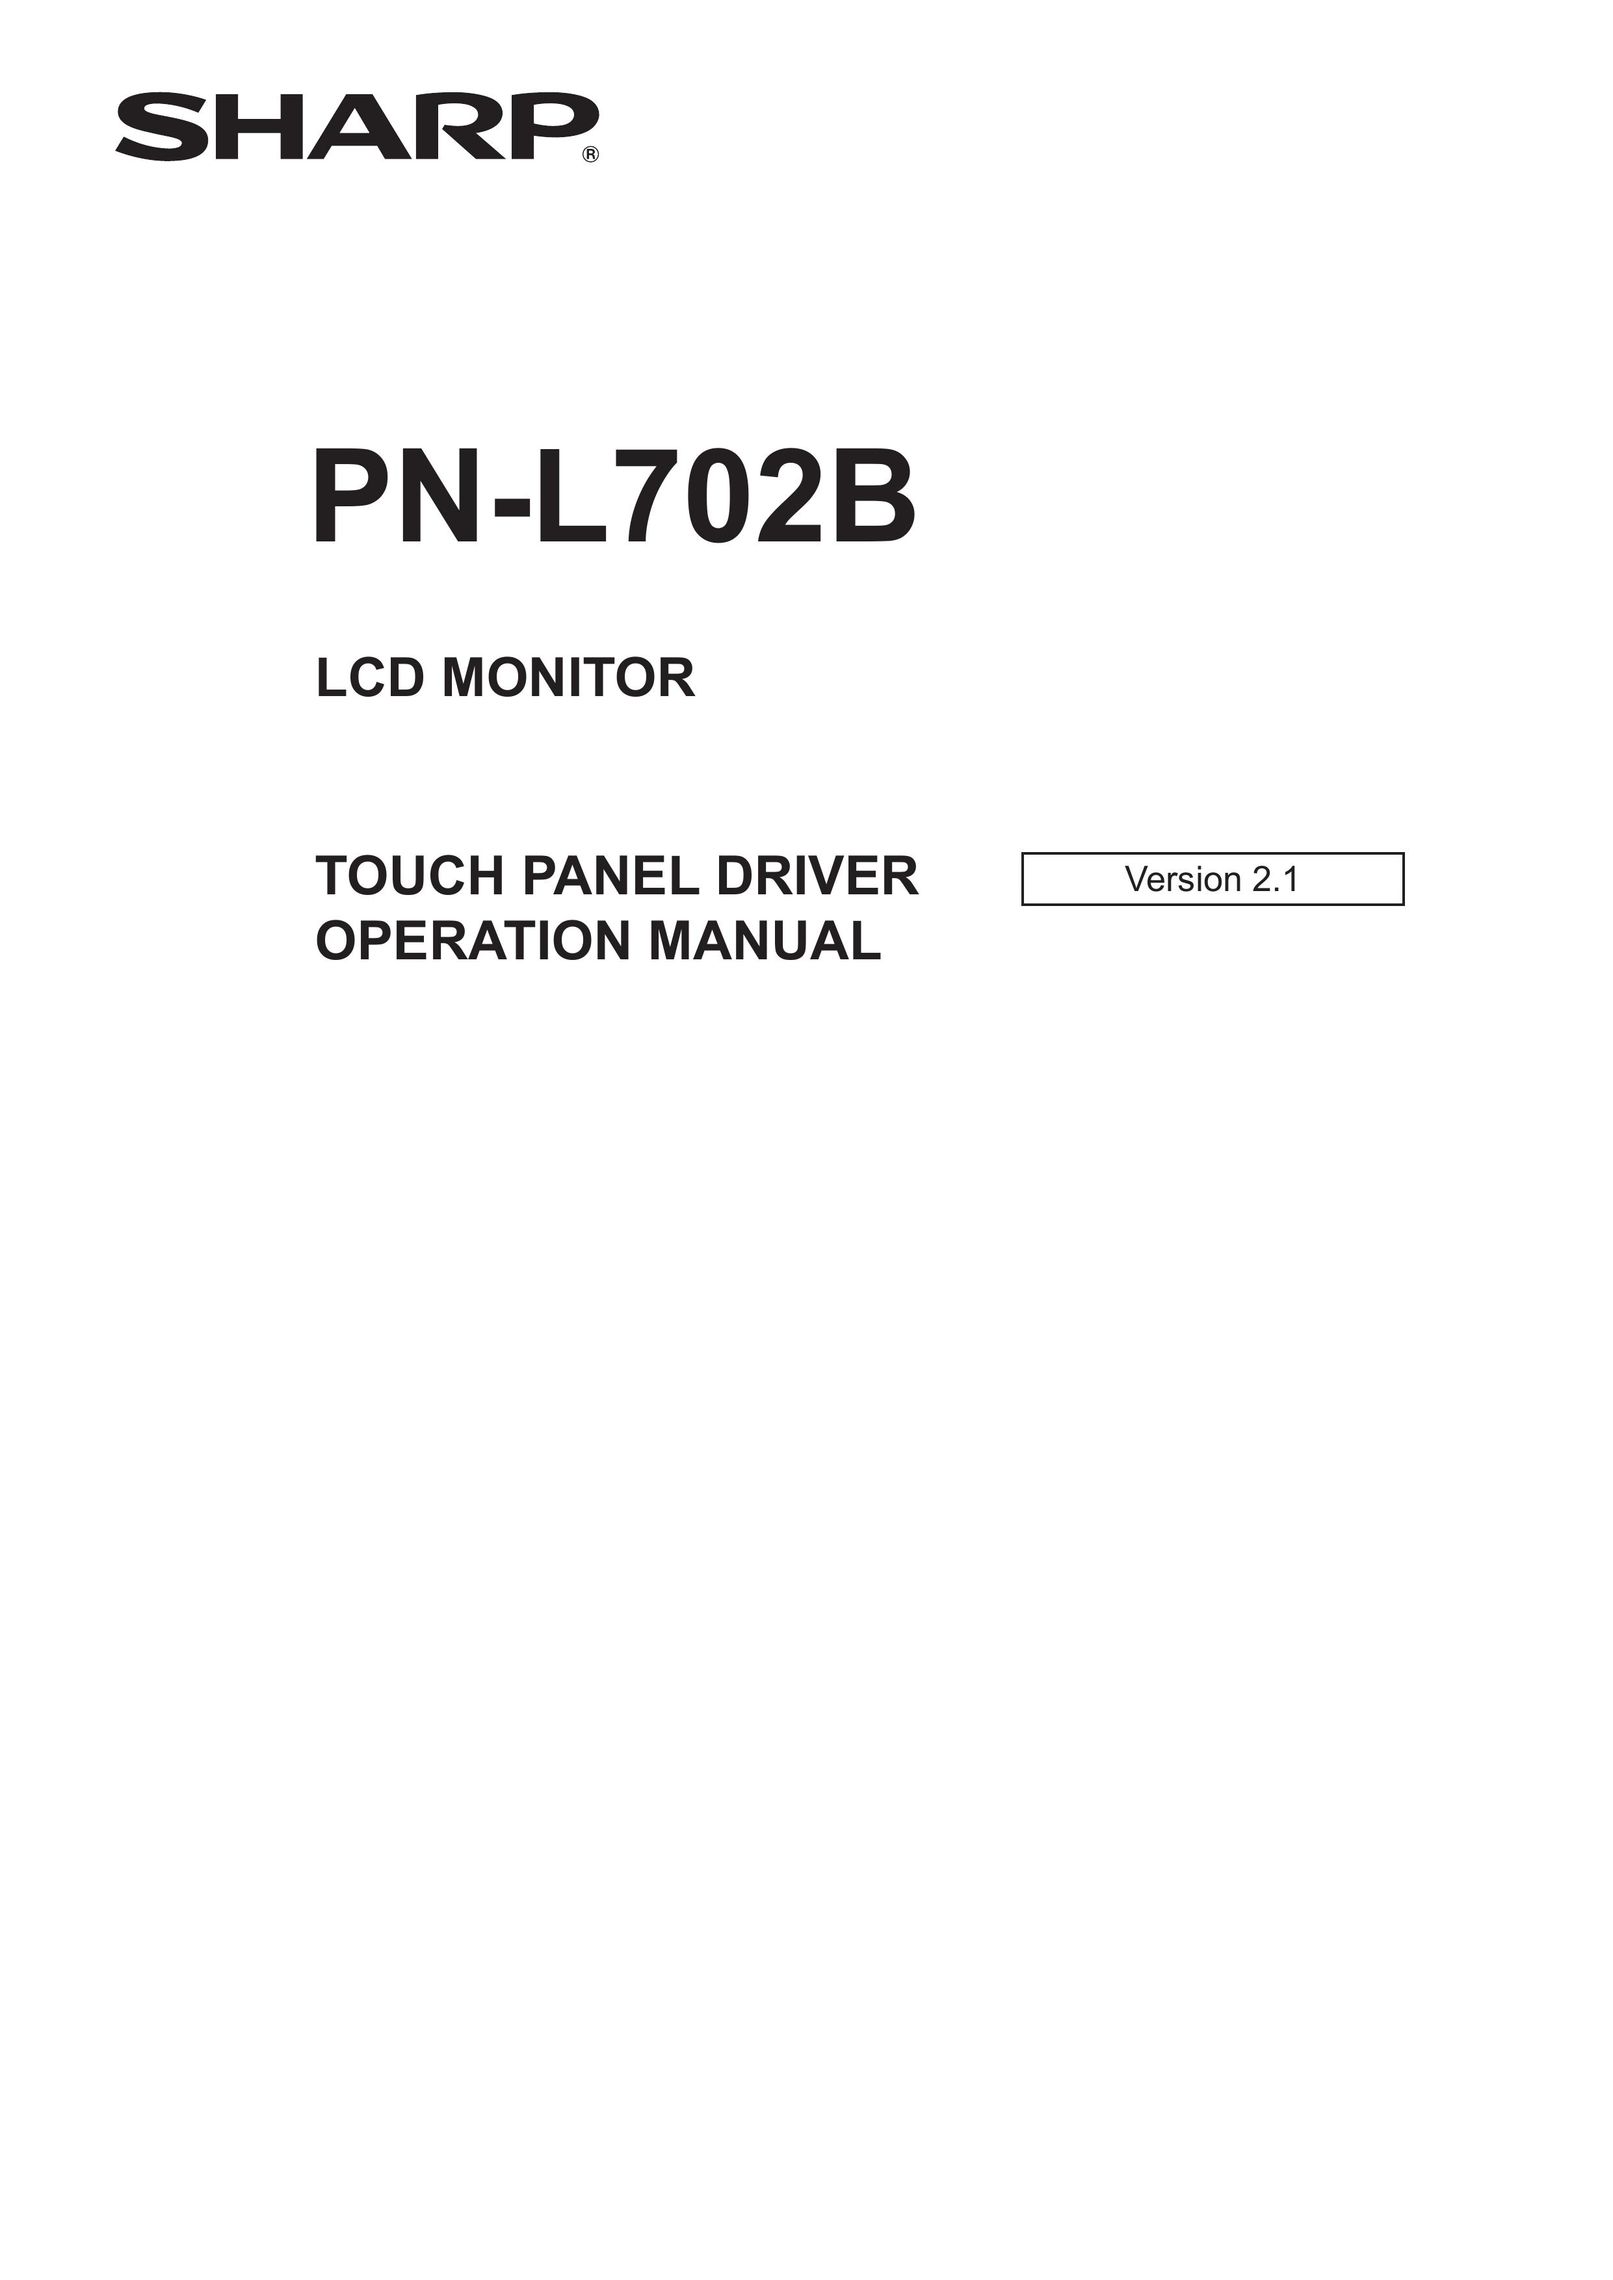 Sharp PN-L702B Computer Monitor User Manual